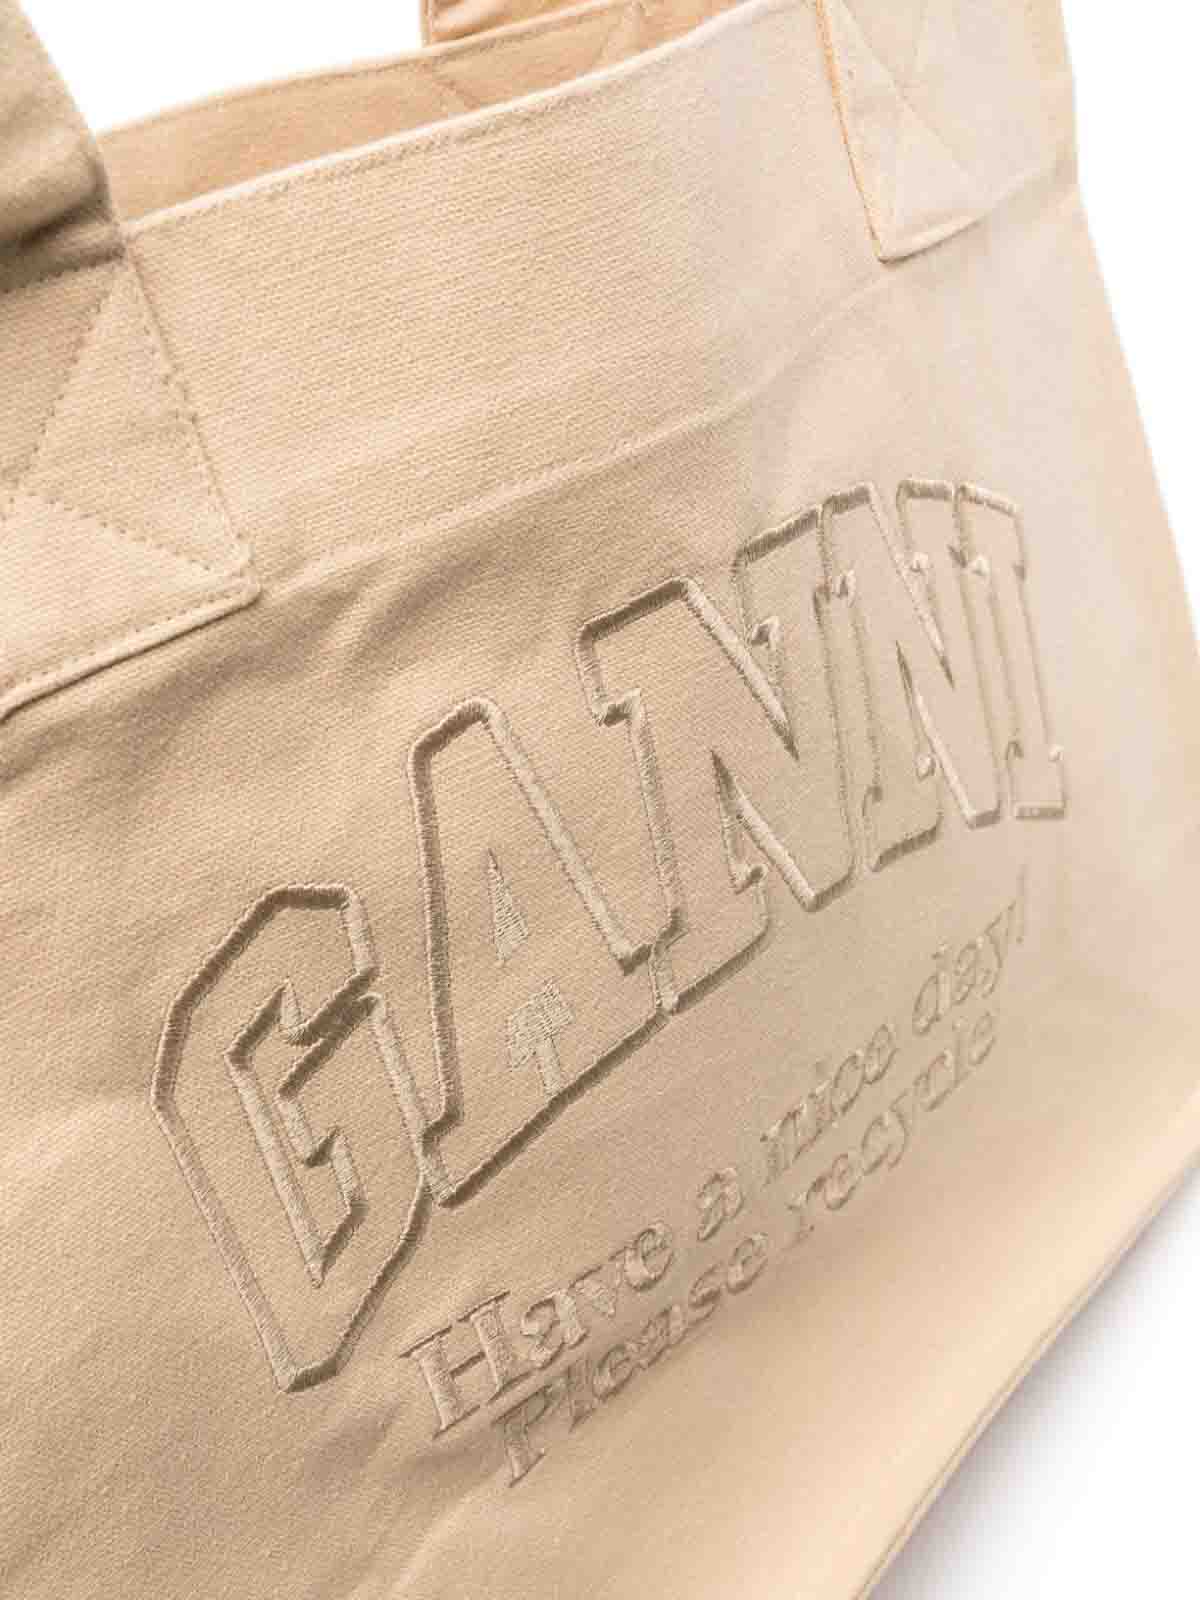 Shop Ganni Bag With Logo In Beige